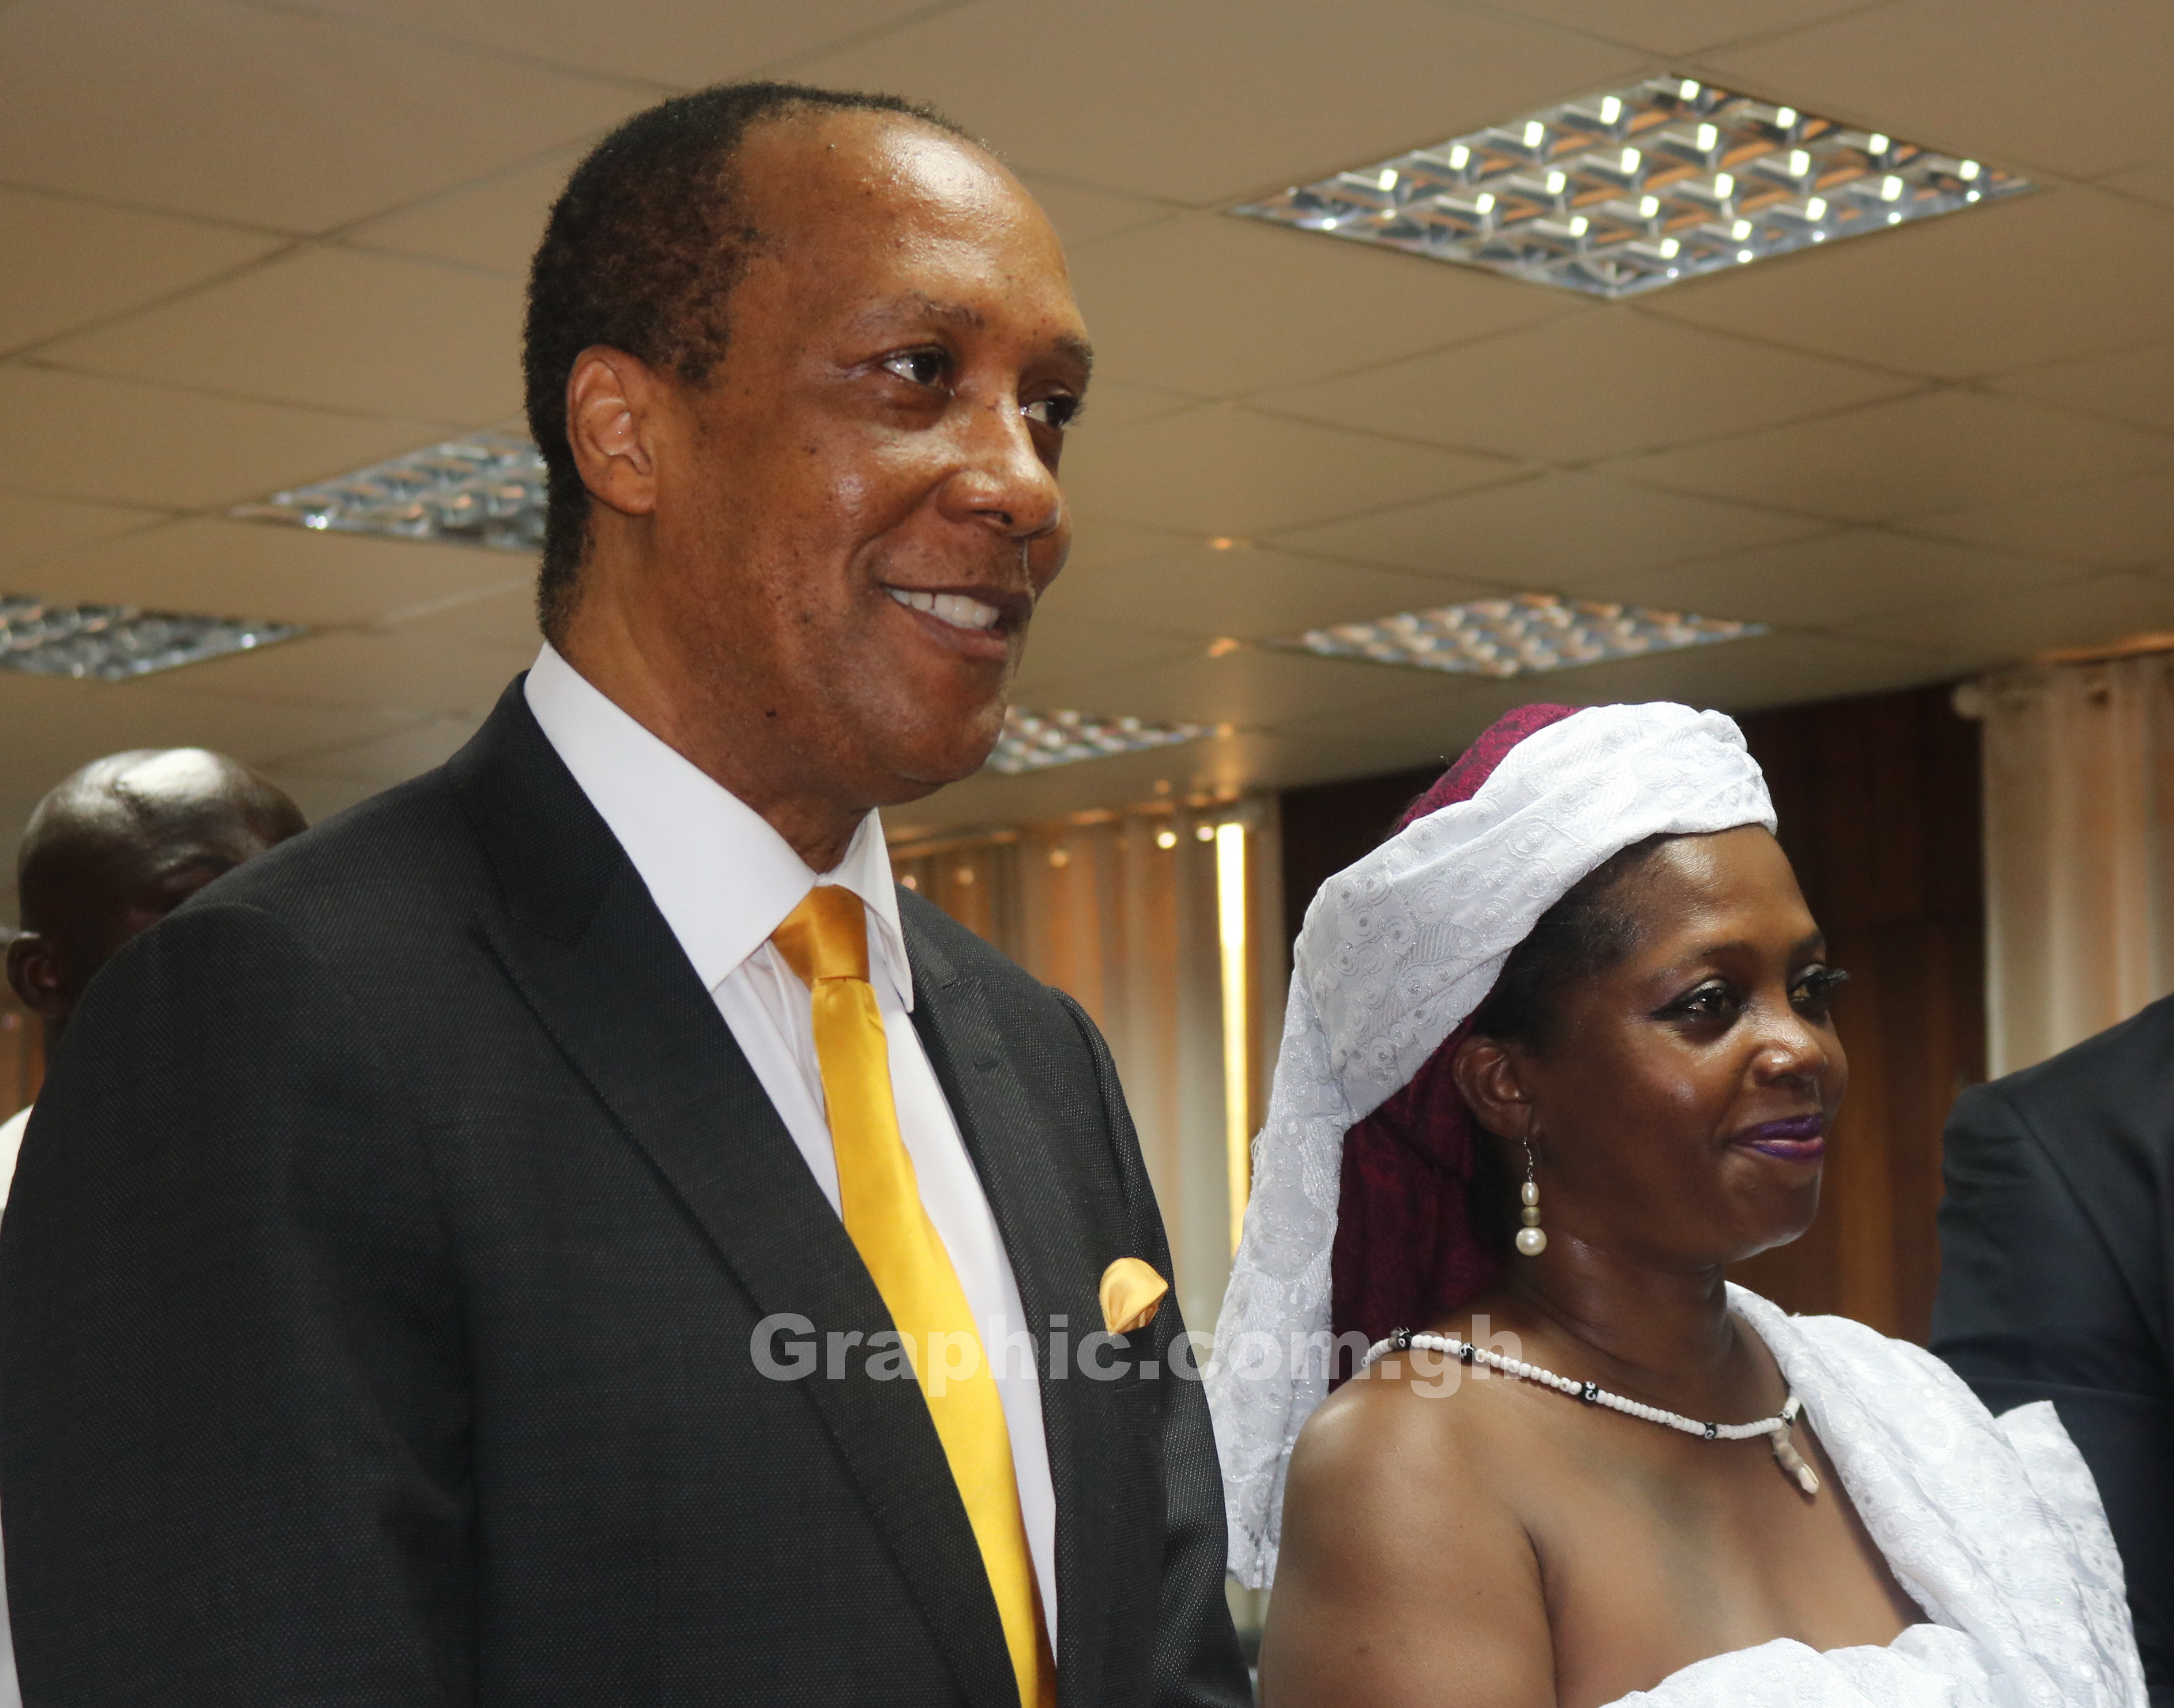 Kwame Asiedu Walker and his running mate, Lady Tamara